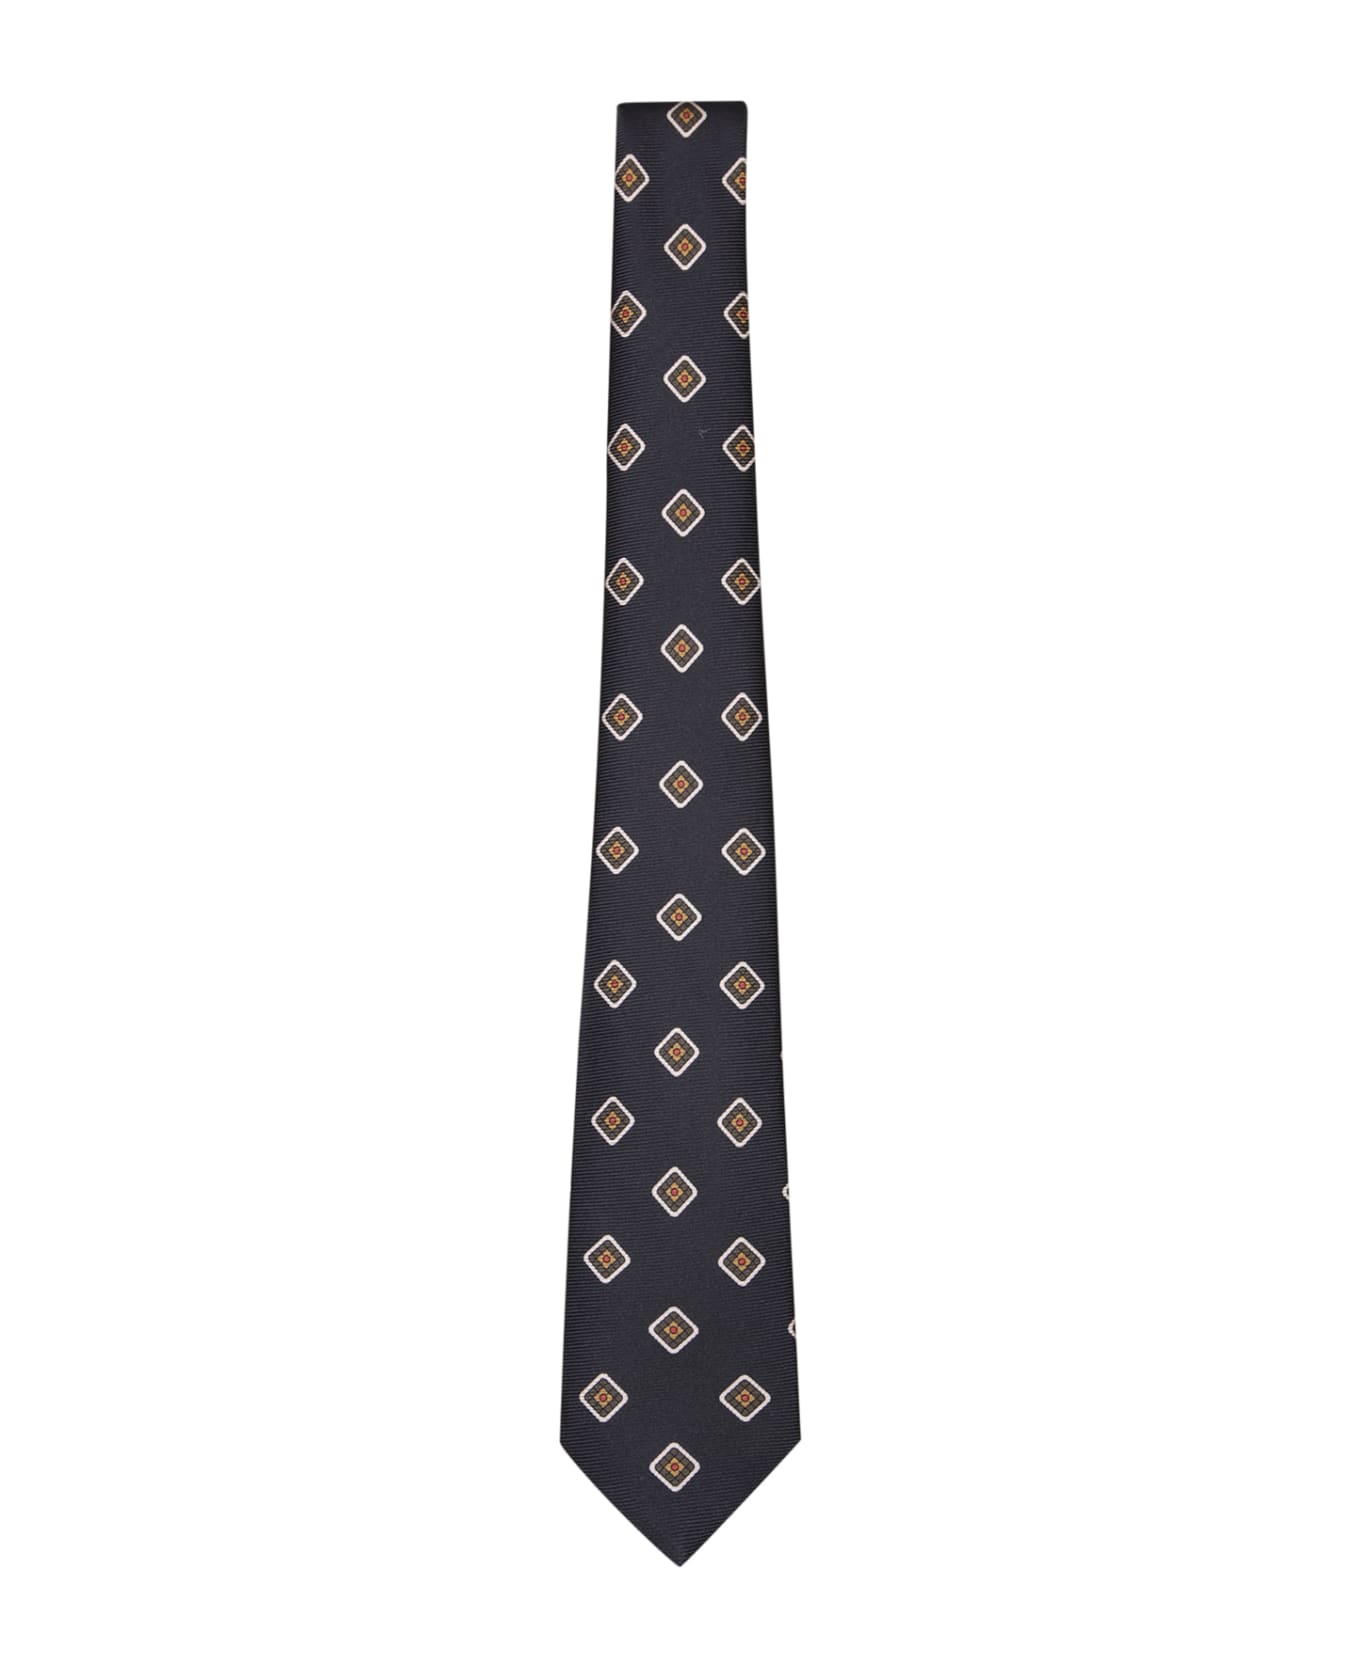 Kiton Black/ Beige Patterned Tie - Black ネクタイ